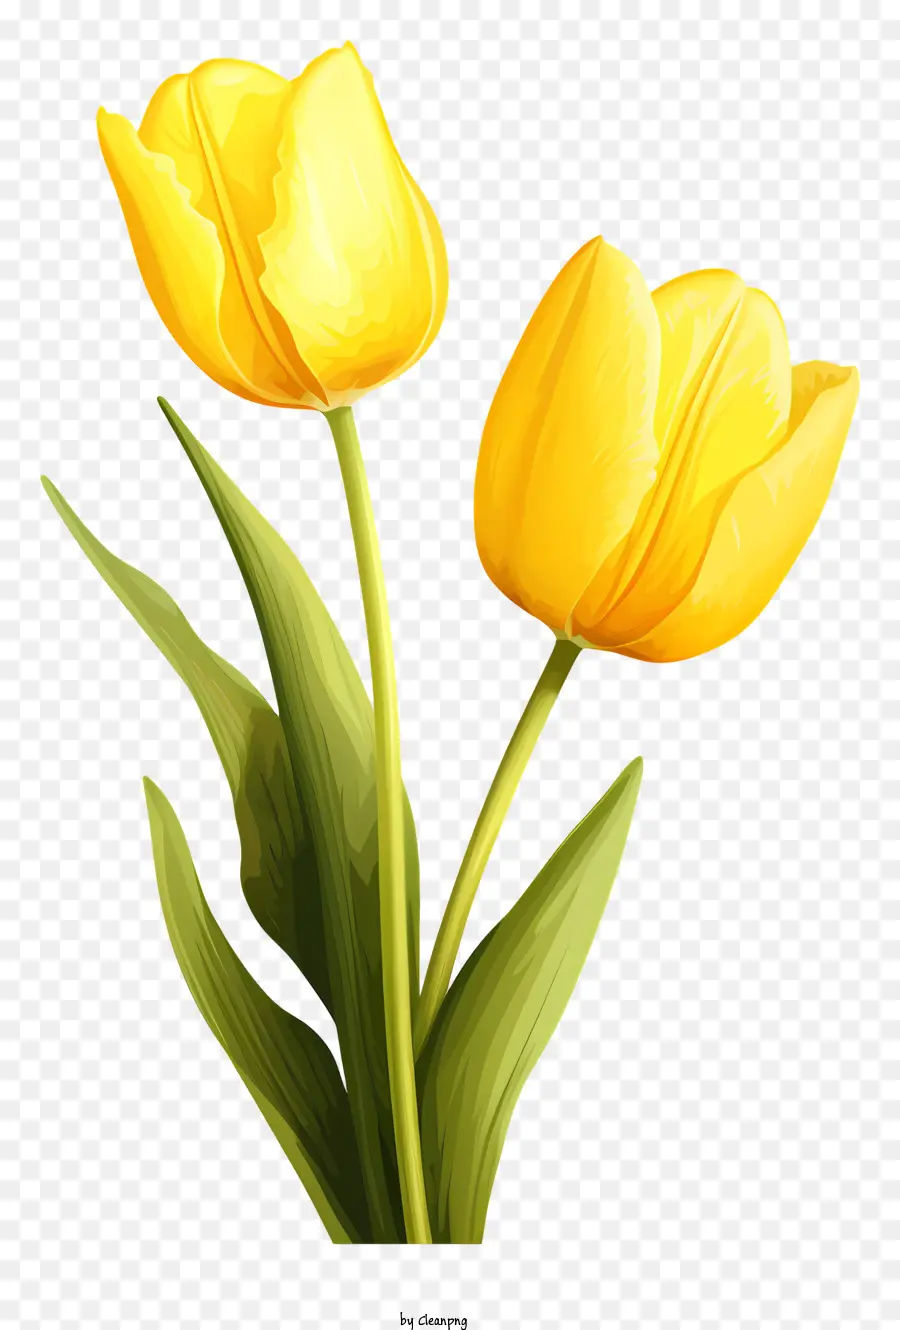 yellow tulips vase freshly picked full bloom long stems